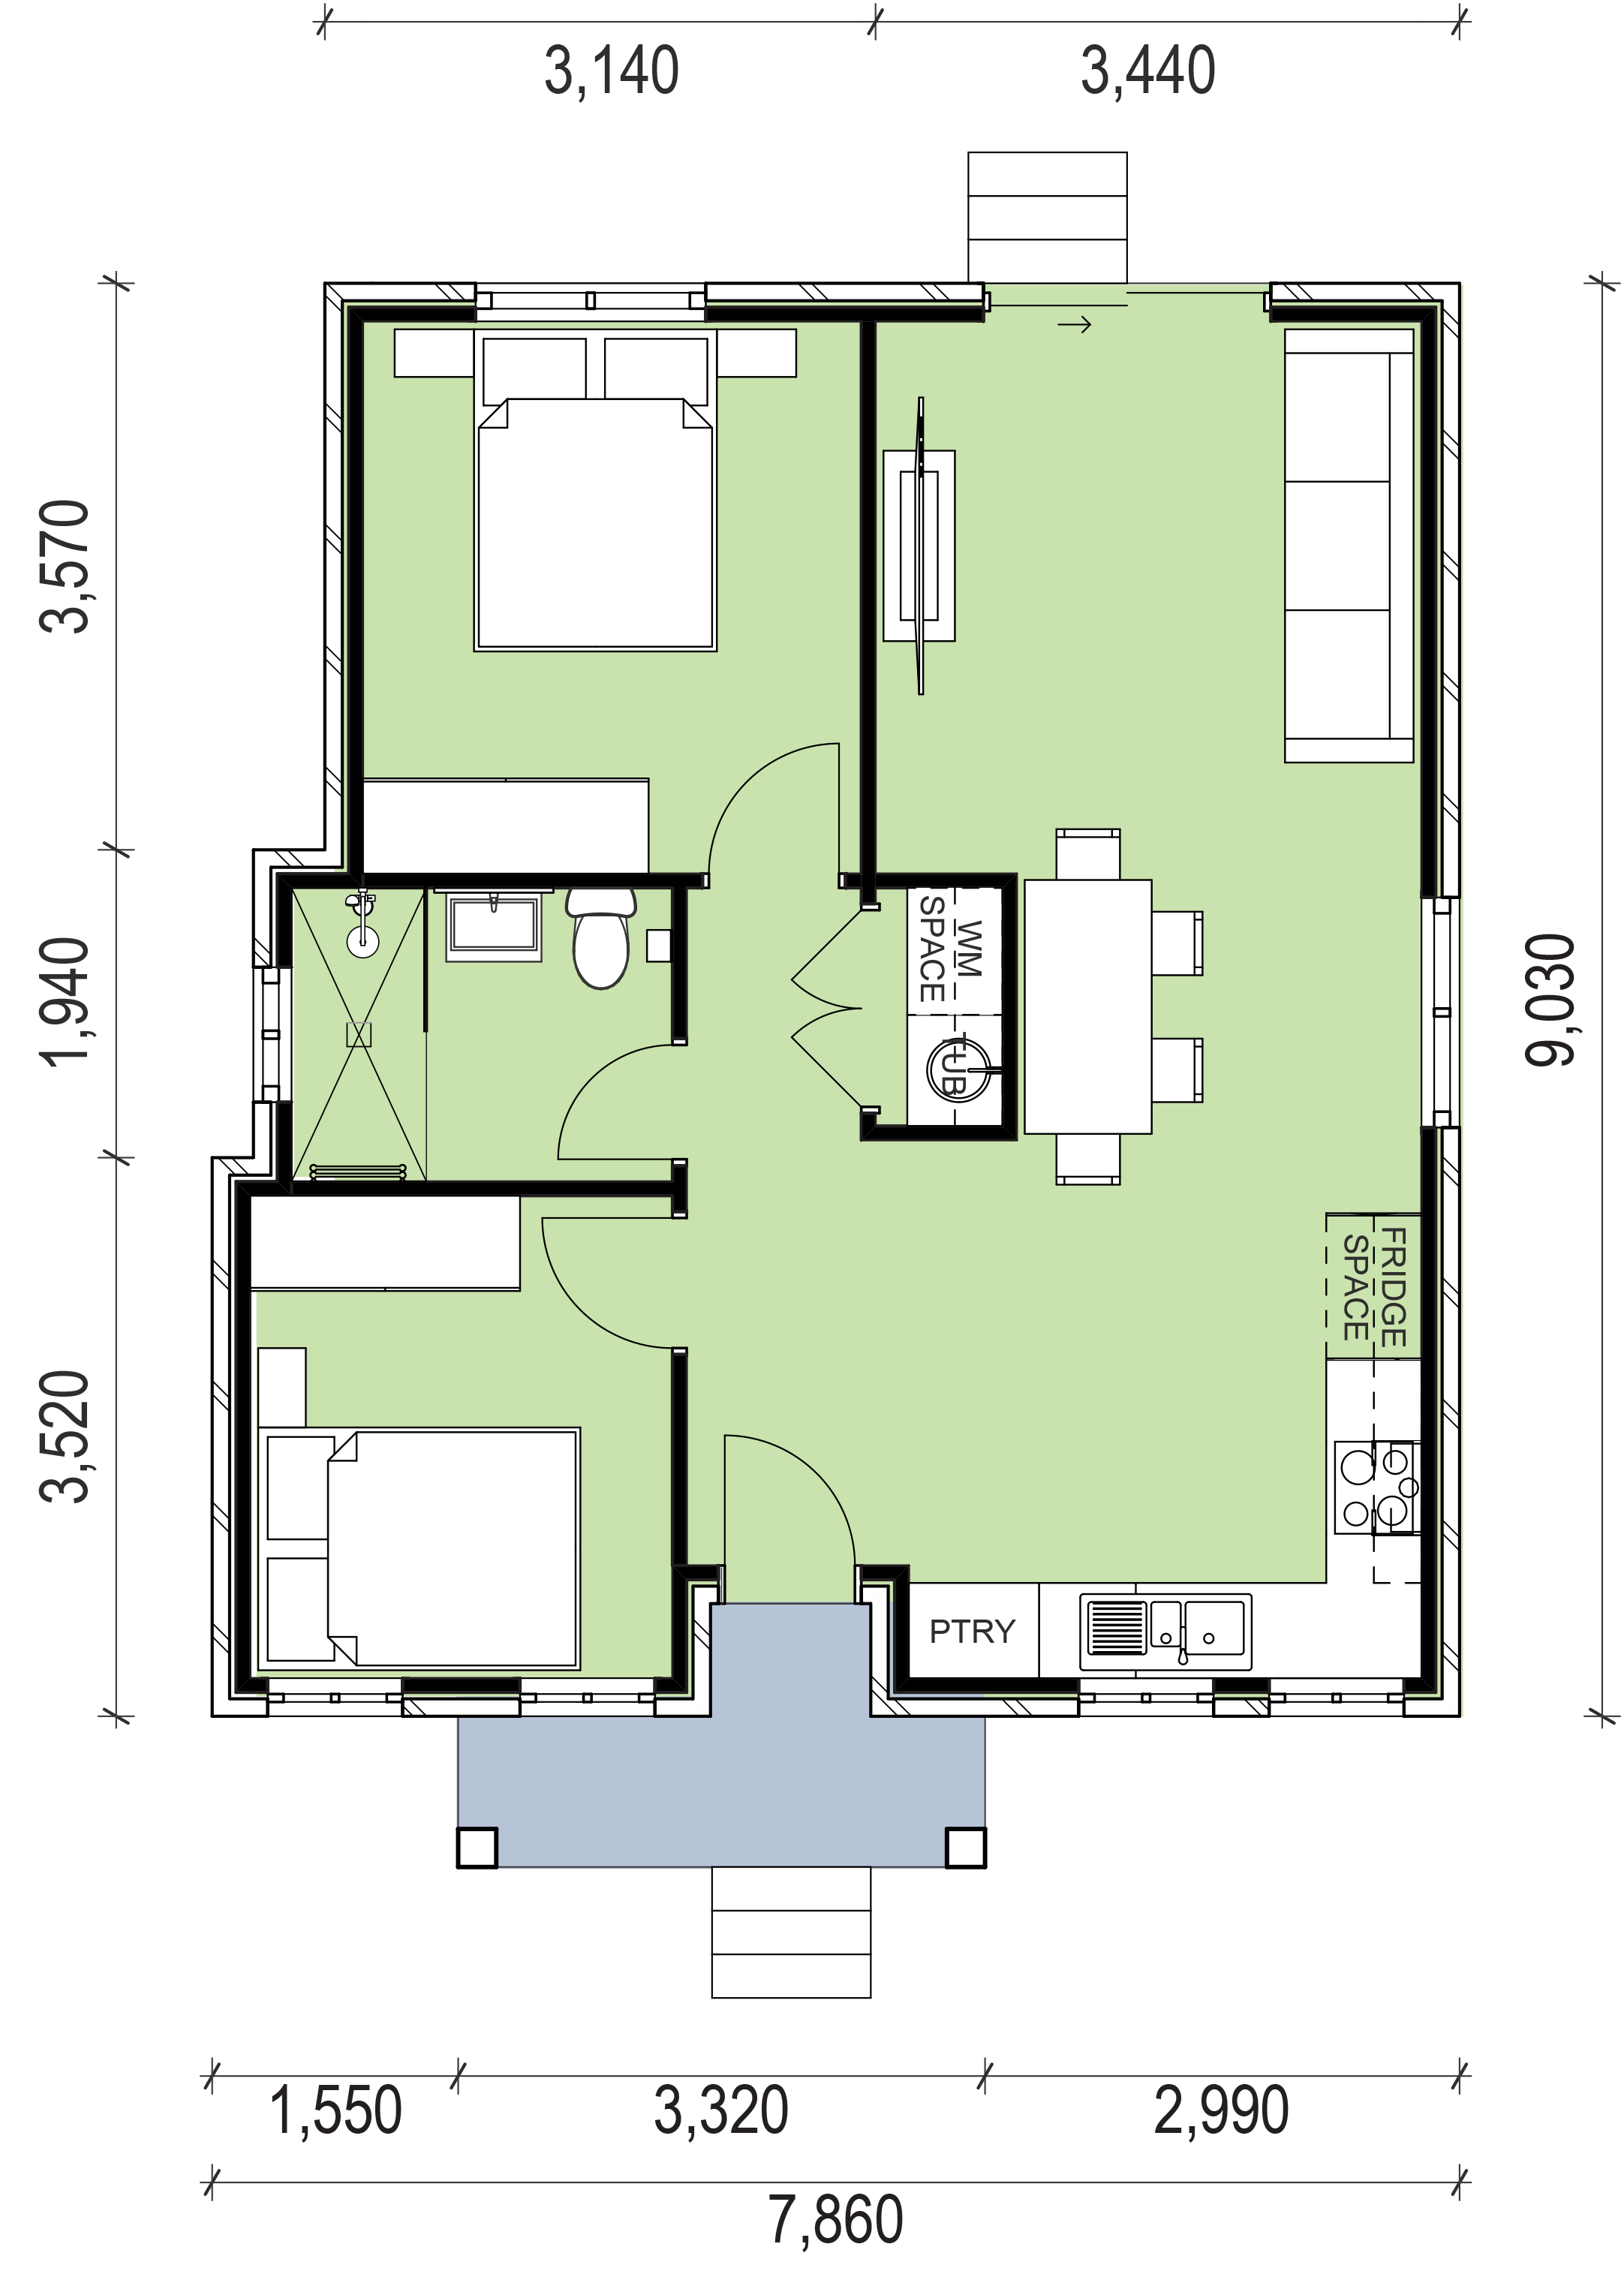 granny flat floor plan design 9030x7860